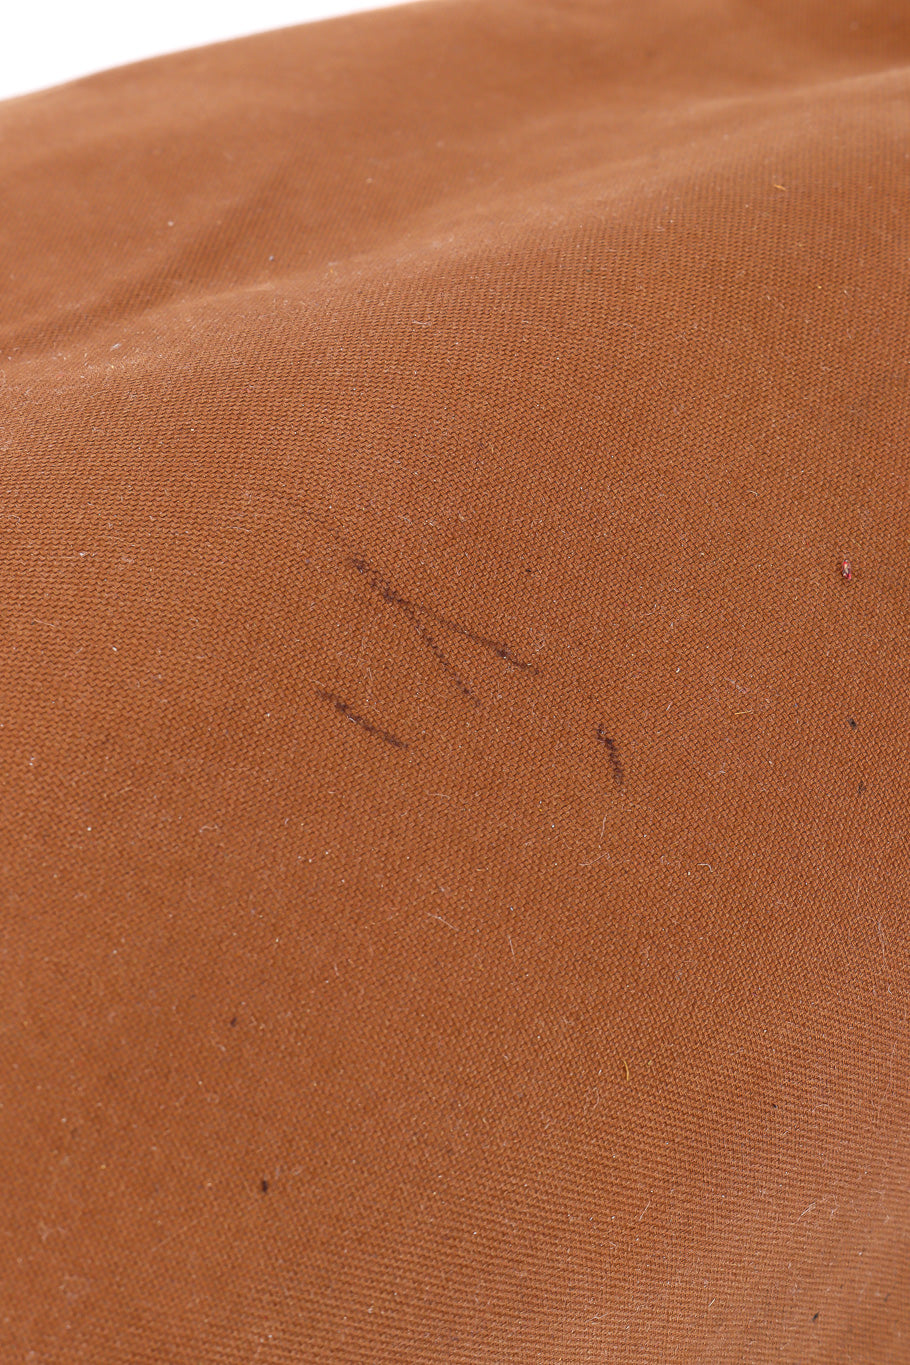 Vintage Louis Vuitton Classic Monogram Speedy 35 Bag pen marks on lining @Recessla